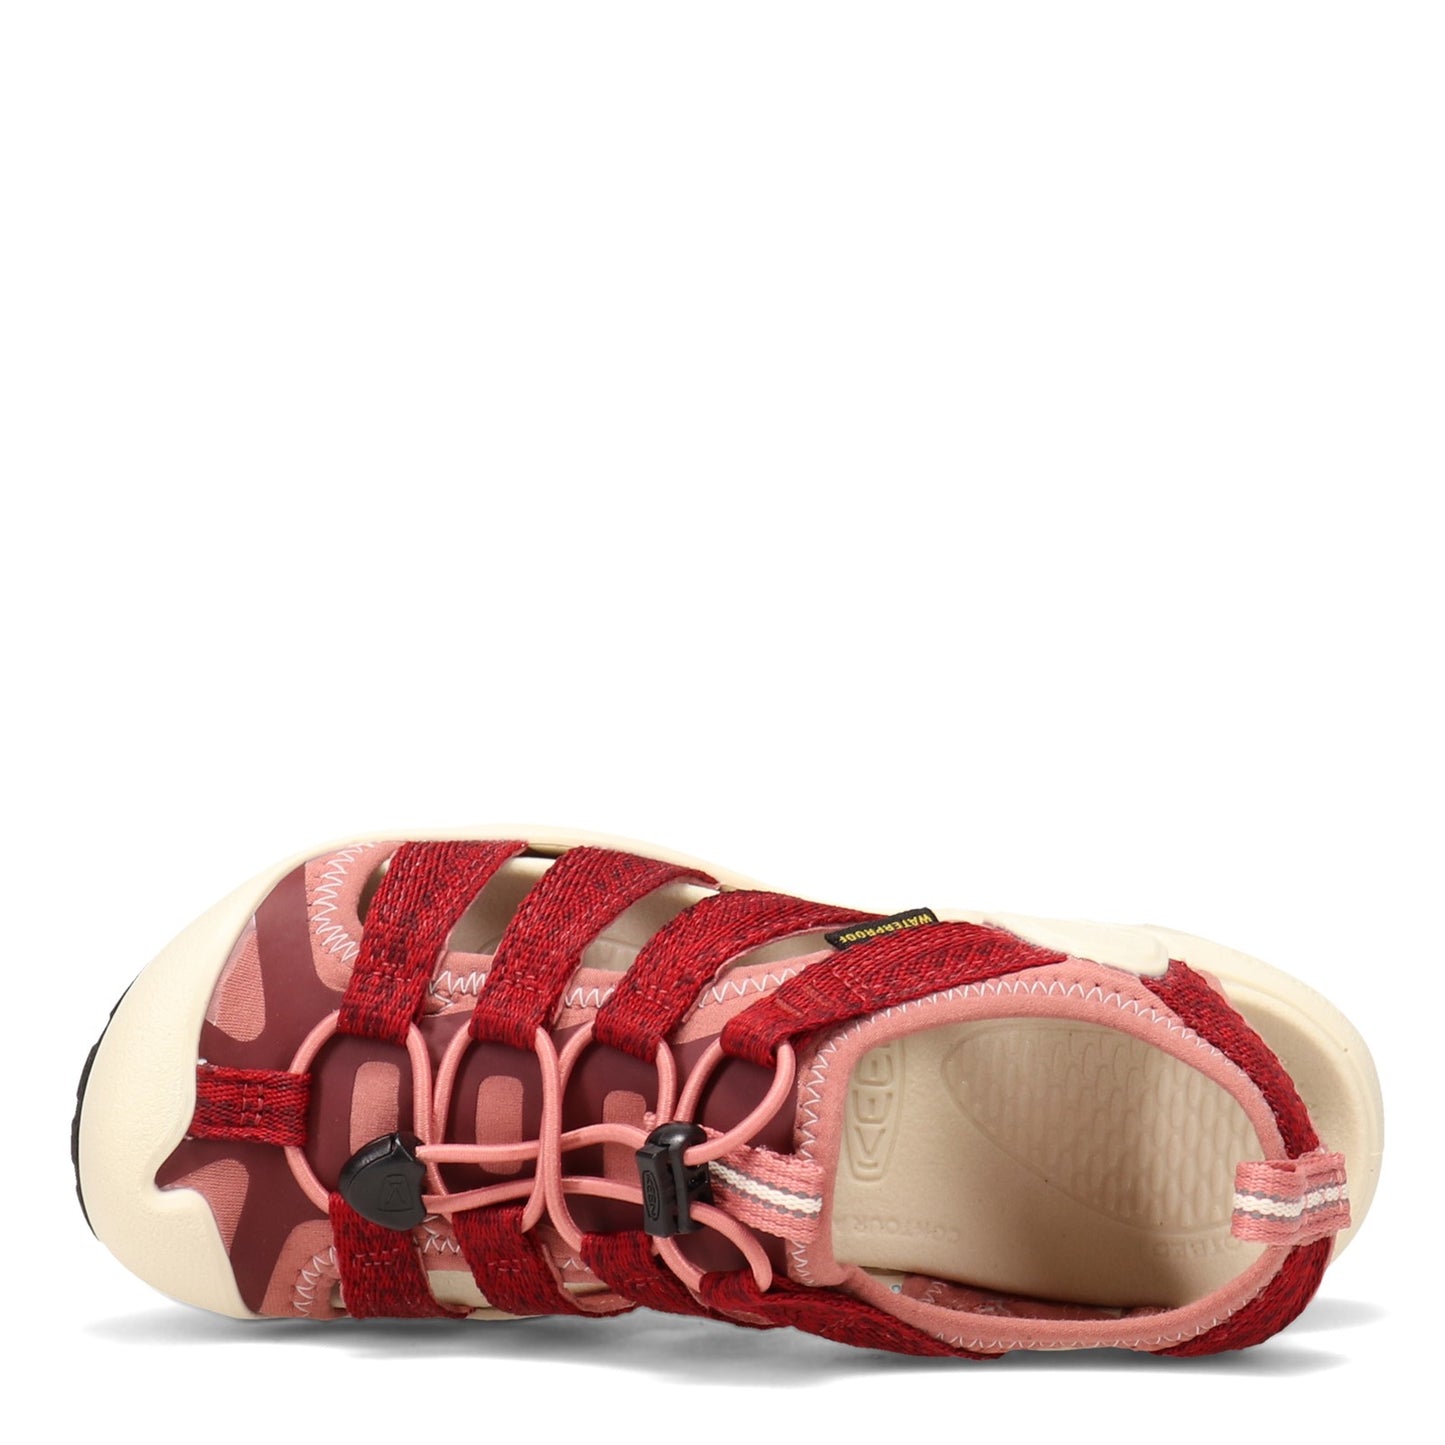 Peltz Shoes  Women's Keen Clearwater II CNX Sandal RED PINK 1024975